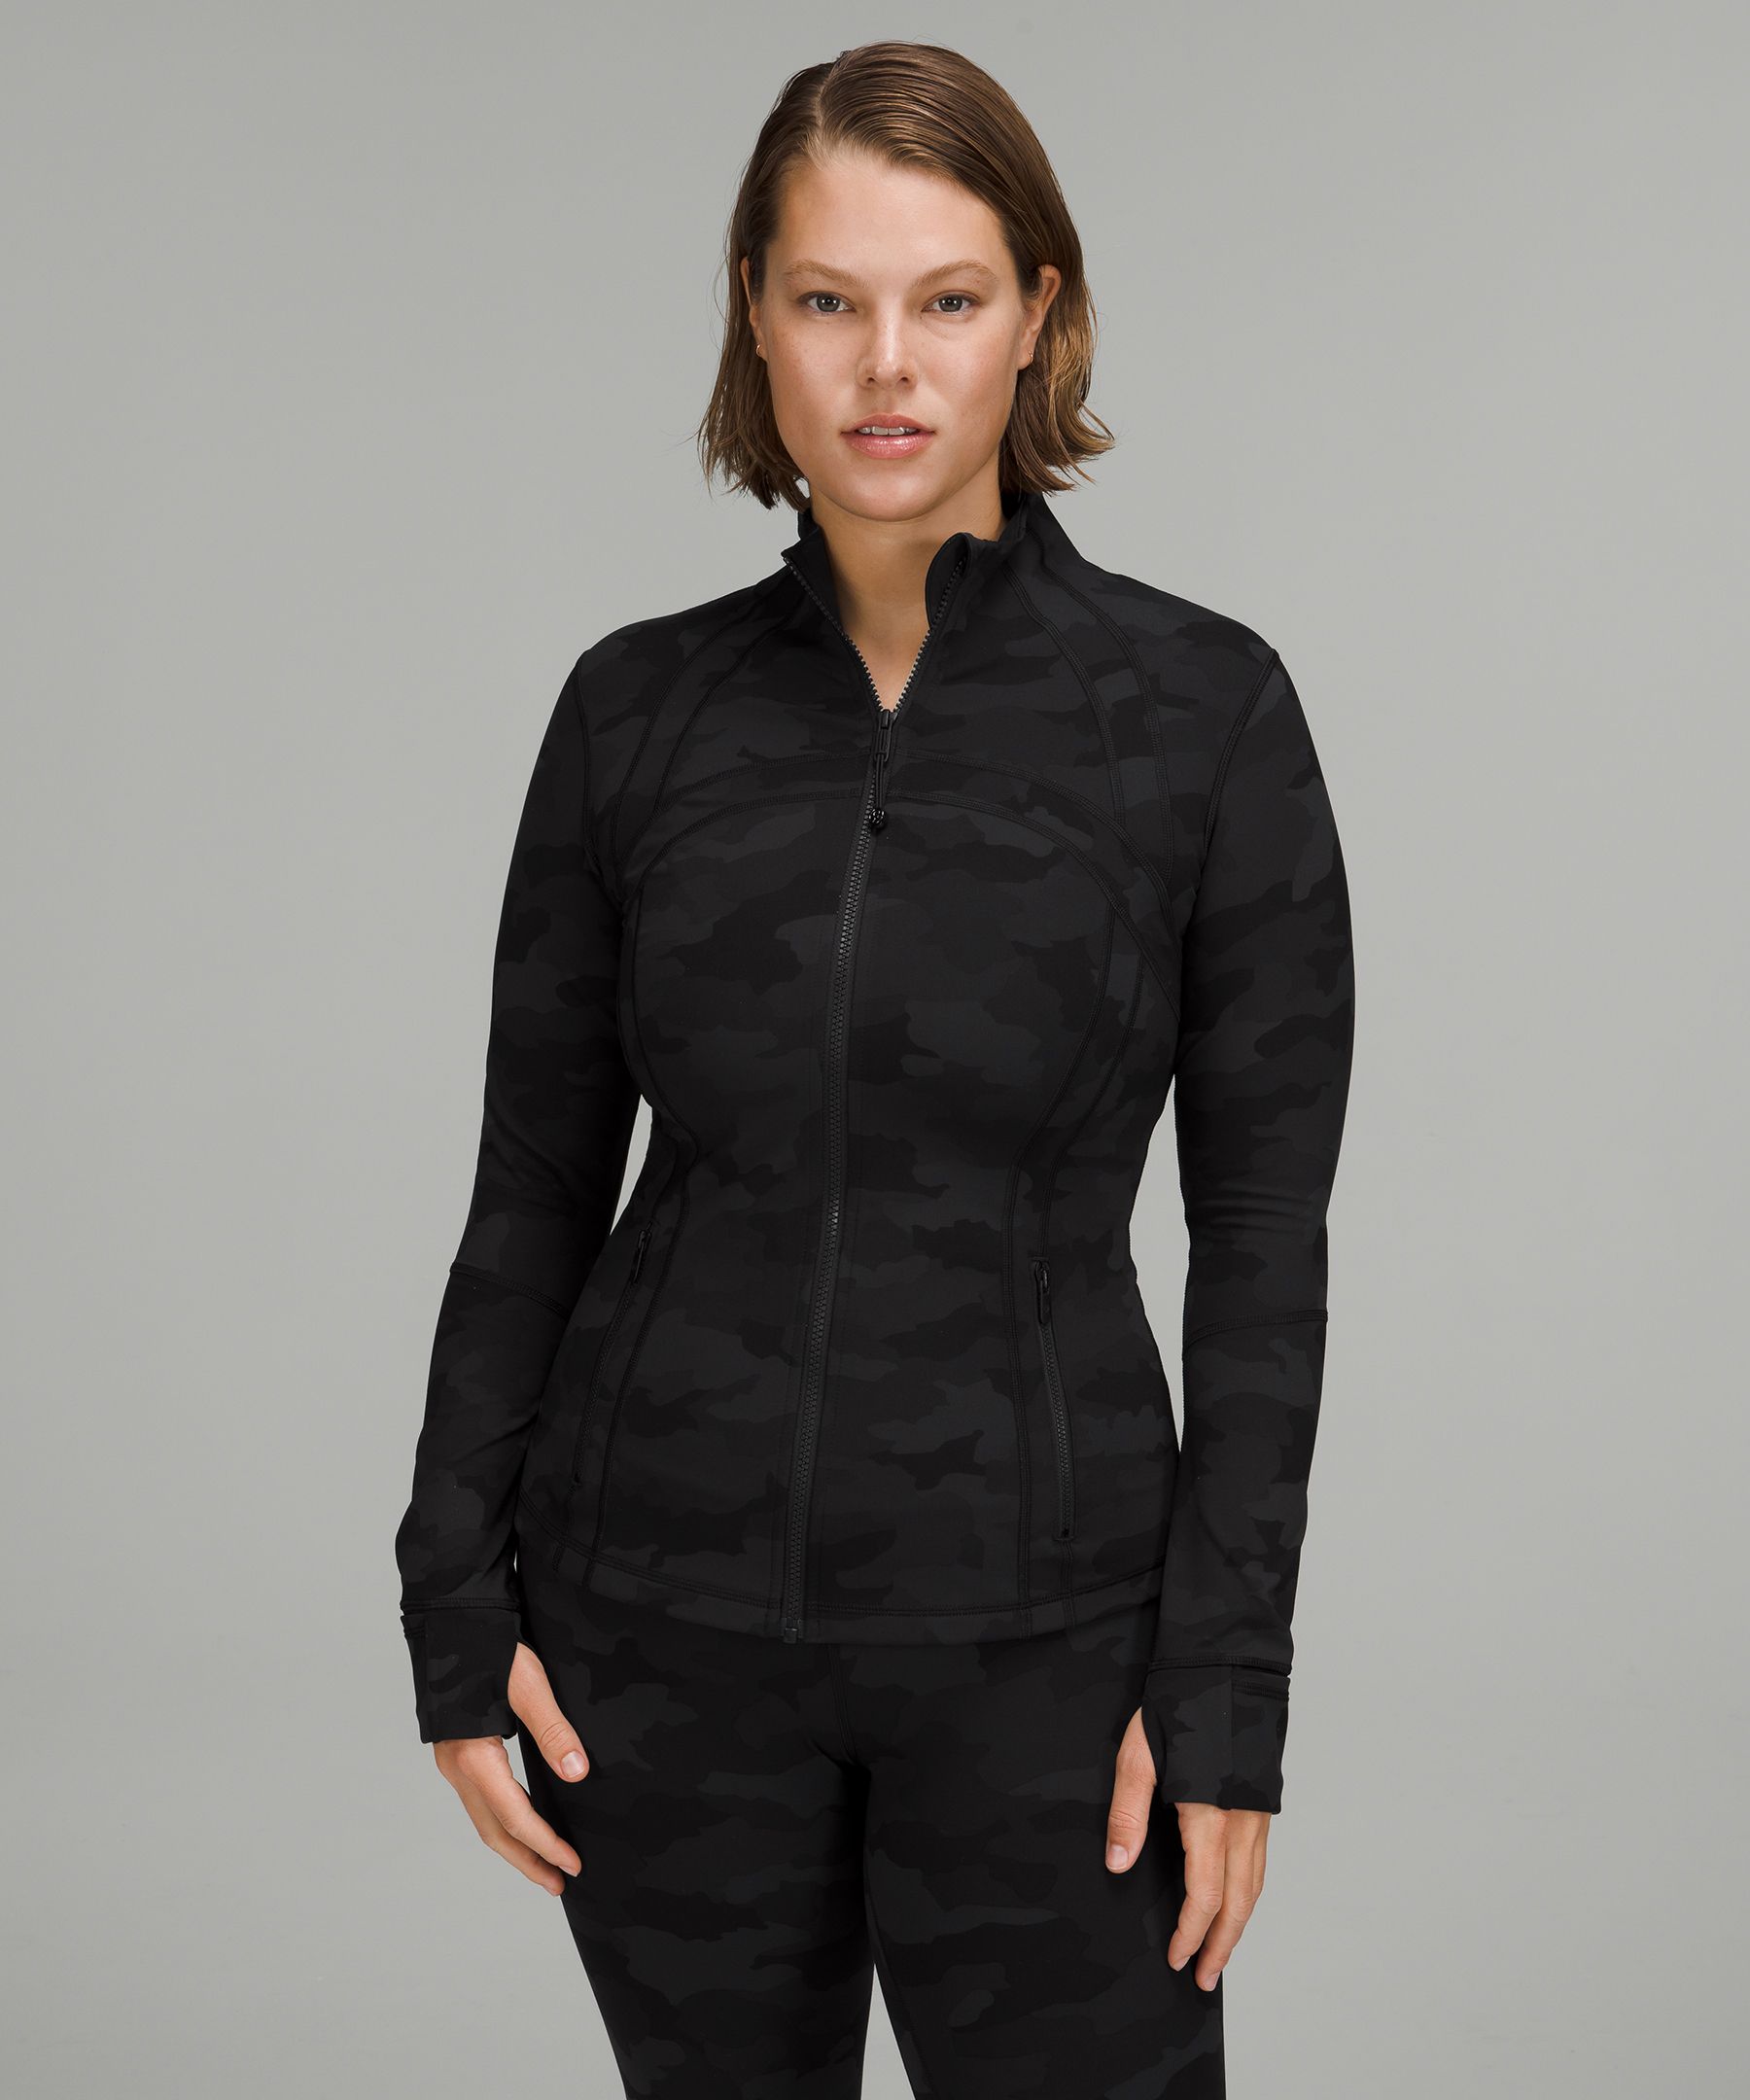 Define Jacket *Luxtreme | Women's Hoodies & Sweatshirts | lululemon